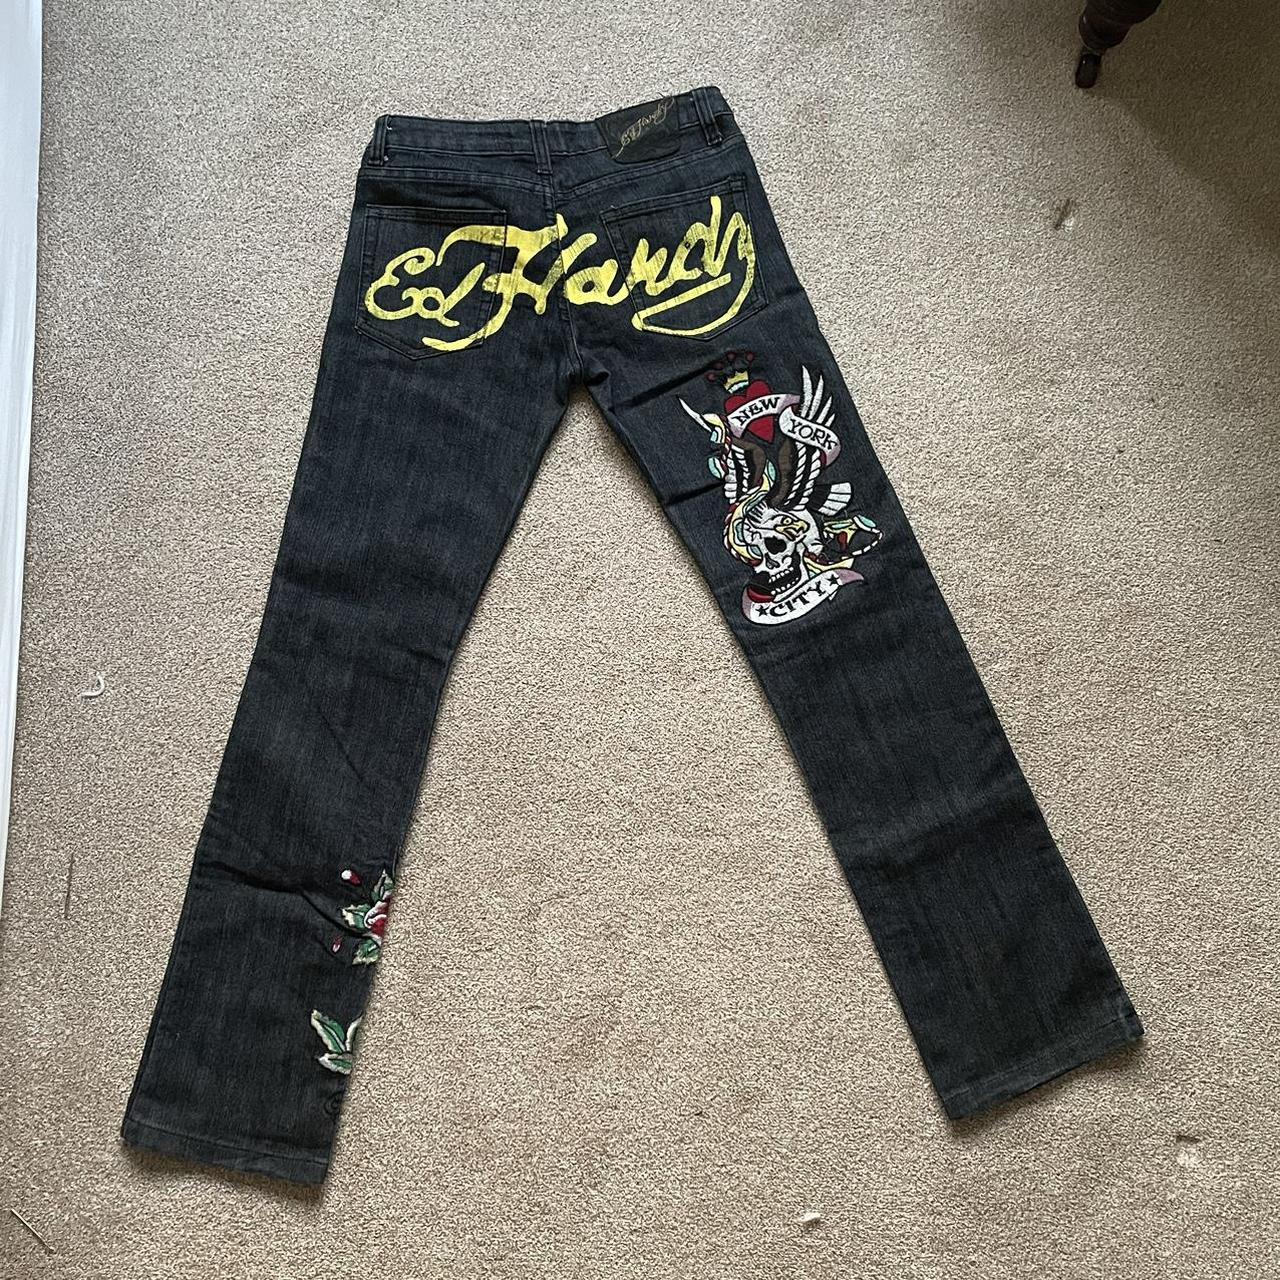 ed hardy low waist vintage jeans. size 28, would fit... - Depop